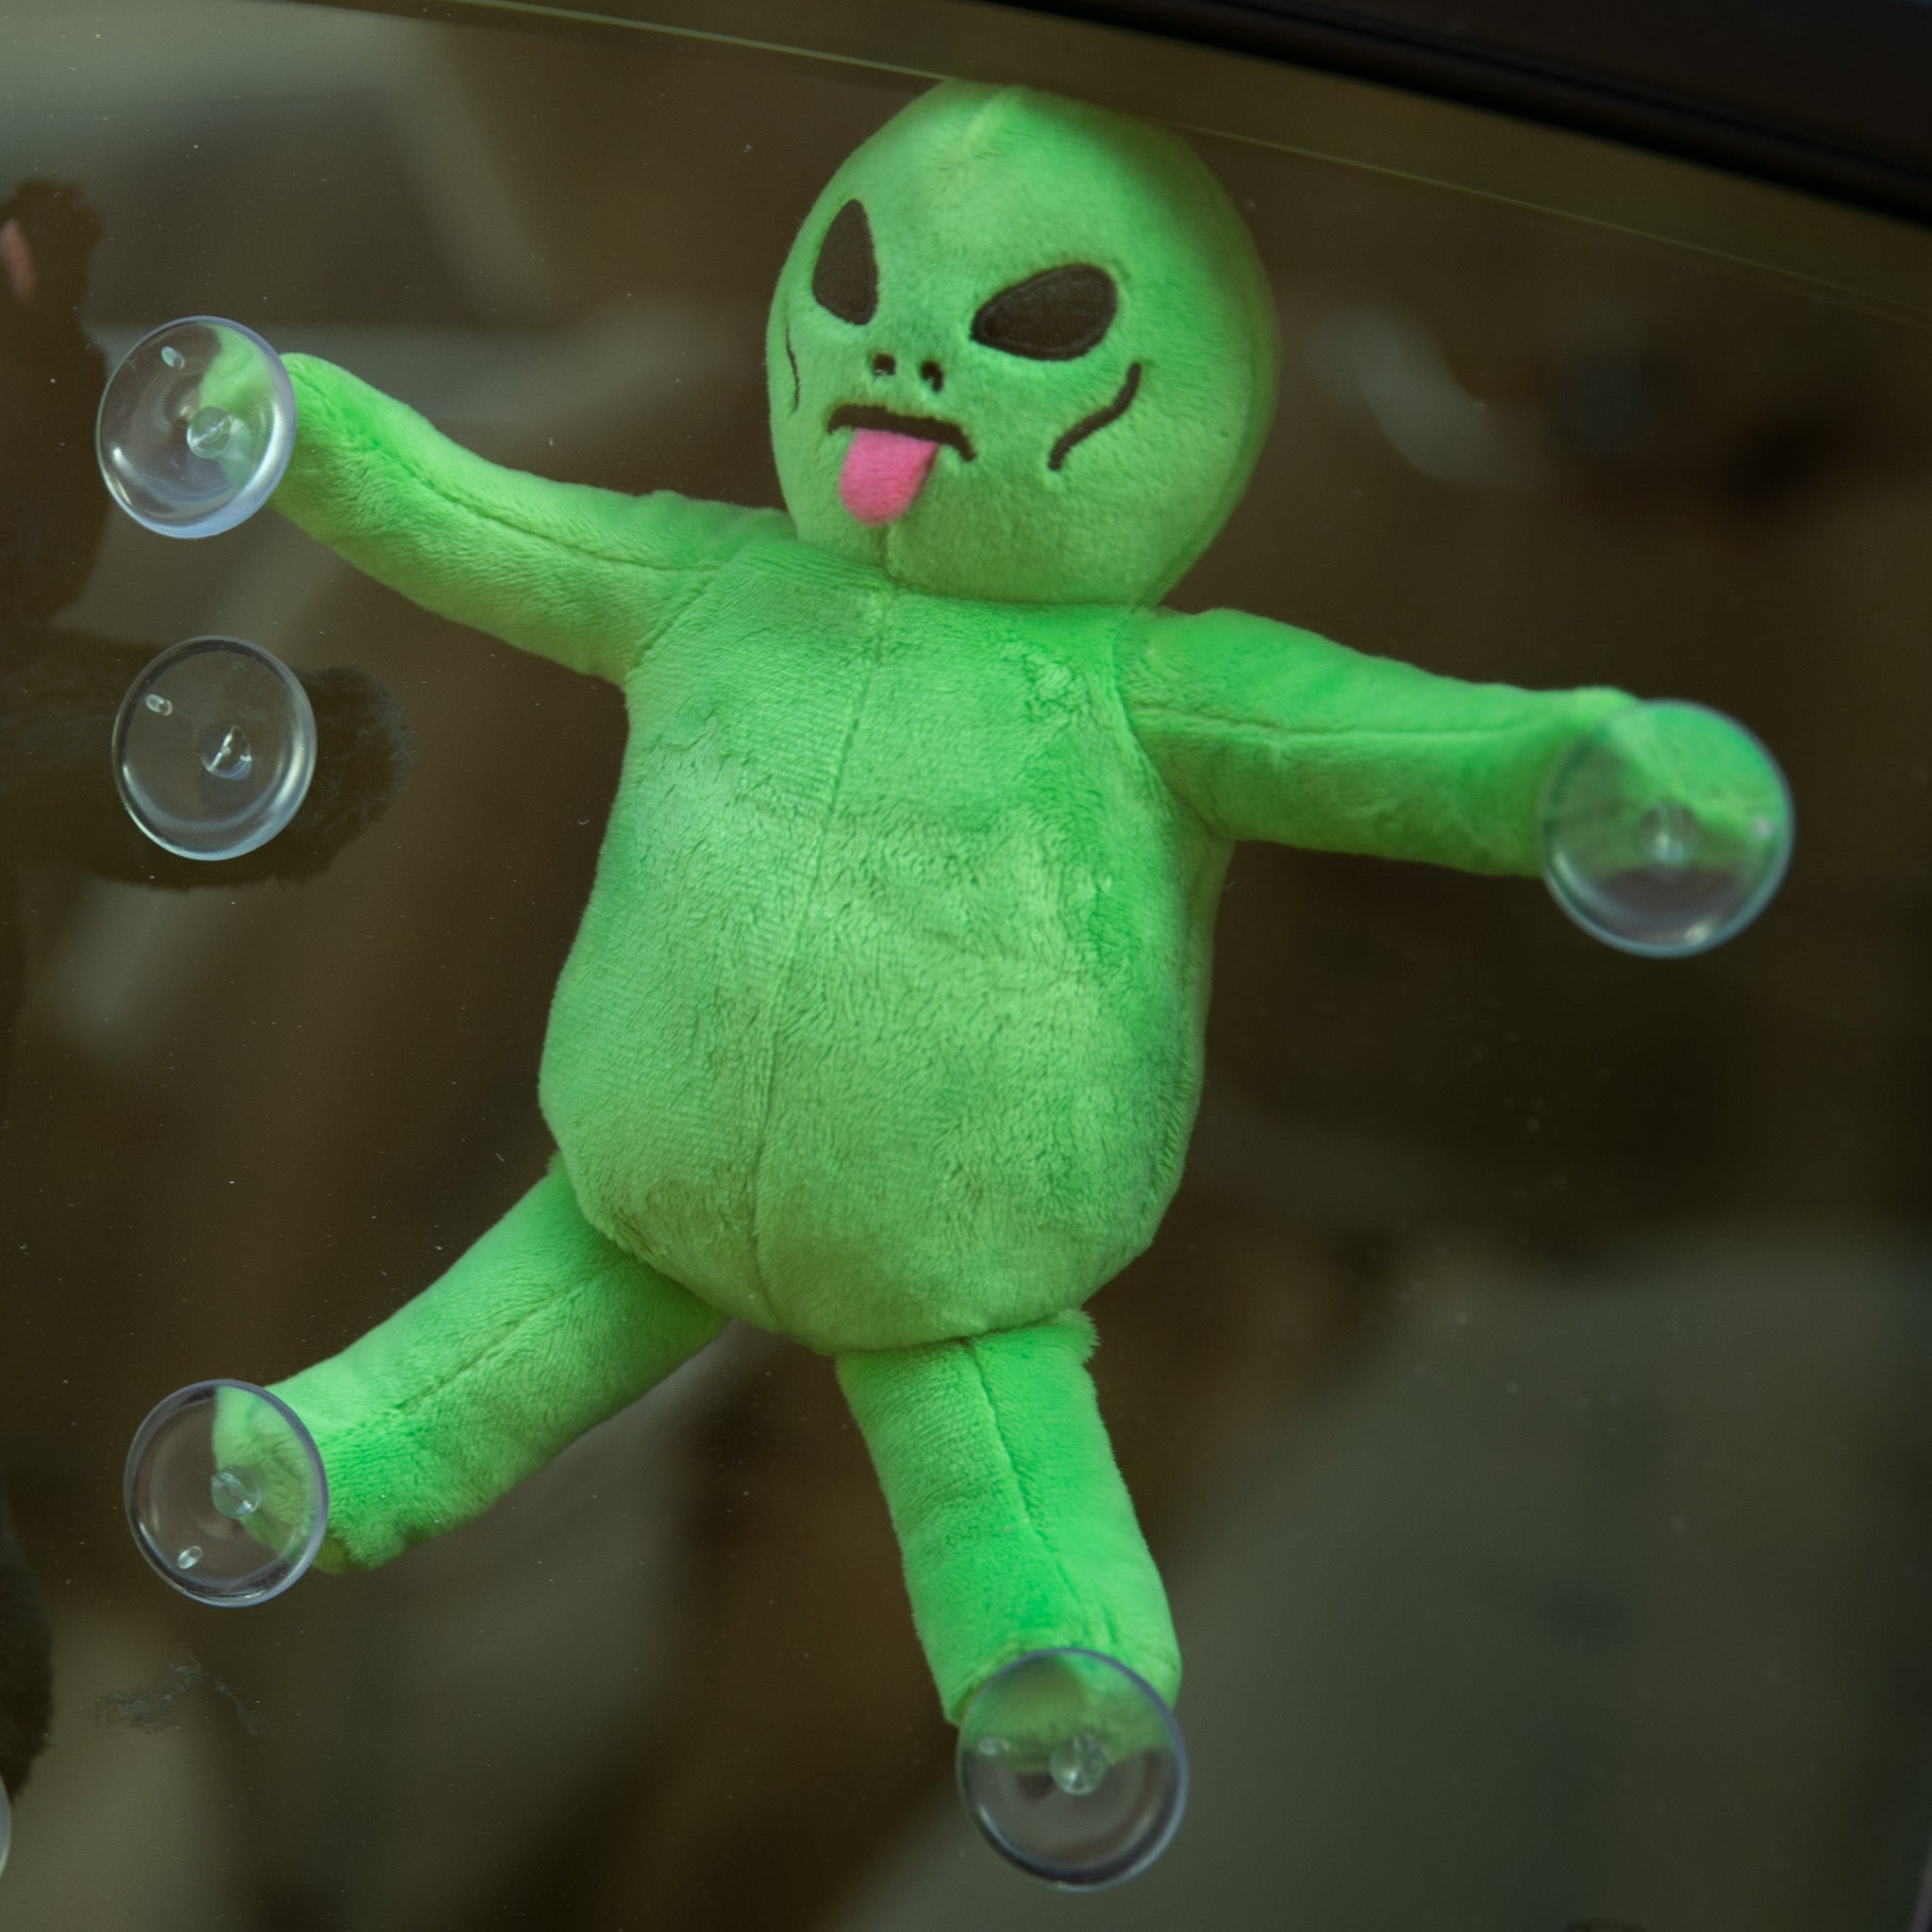 RIPNDIP Alien Window Plush Suction Cup Plush Doll (Green)